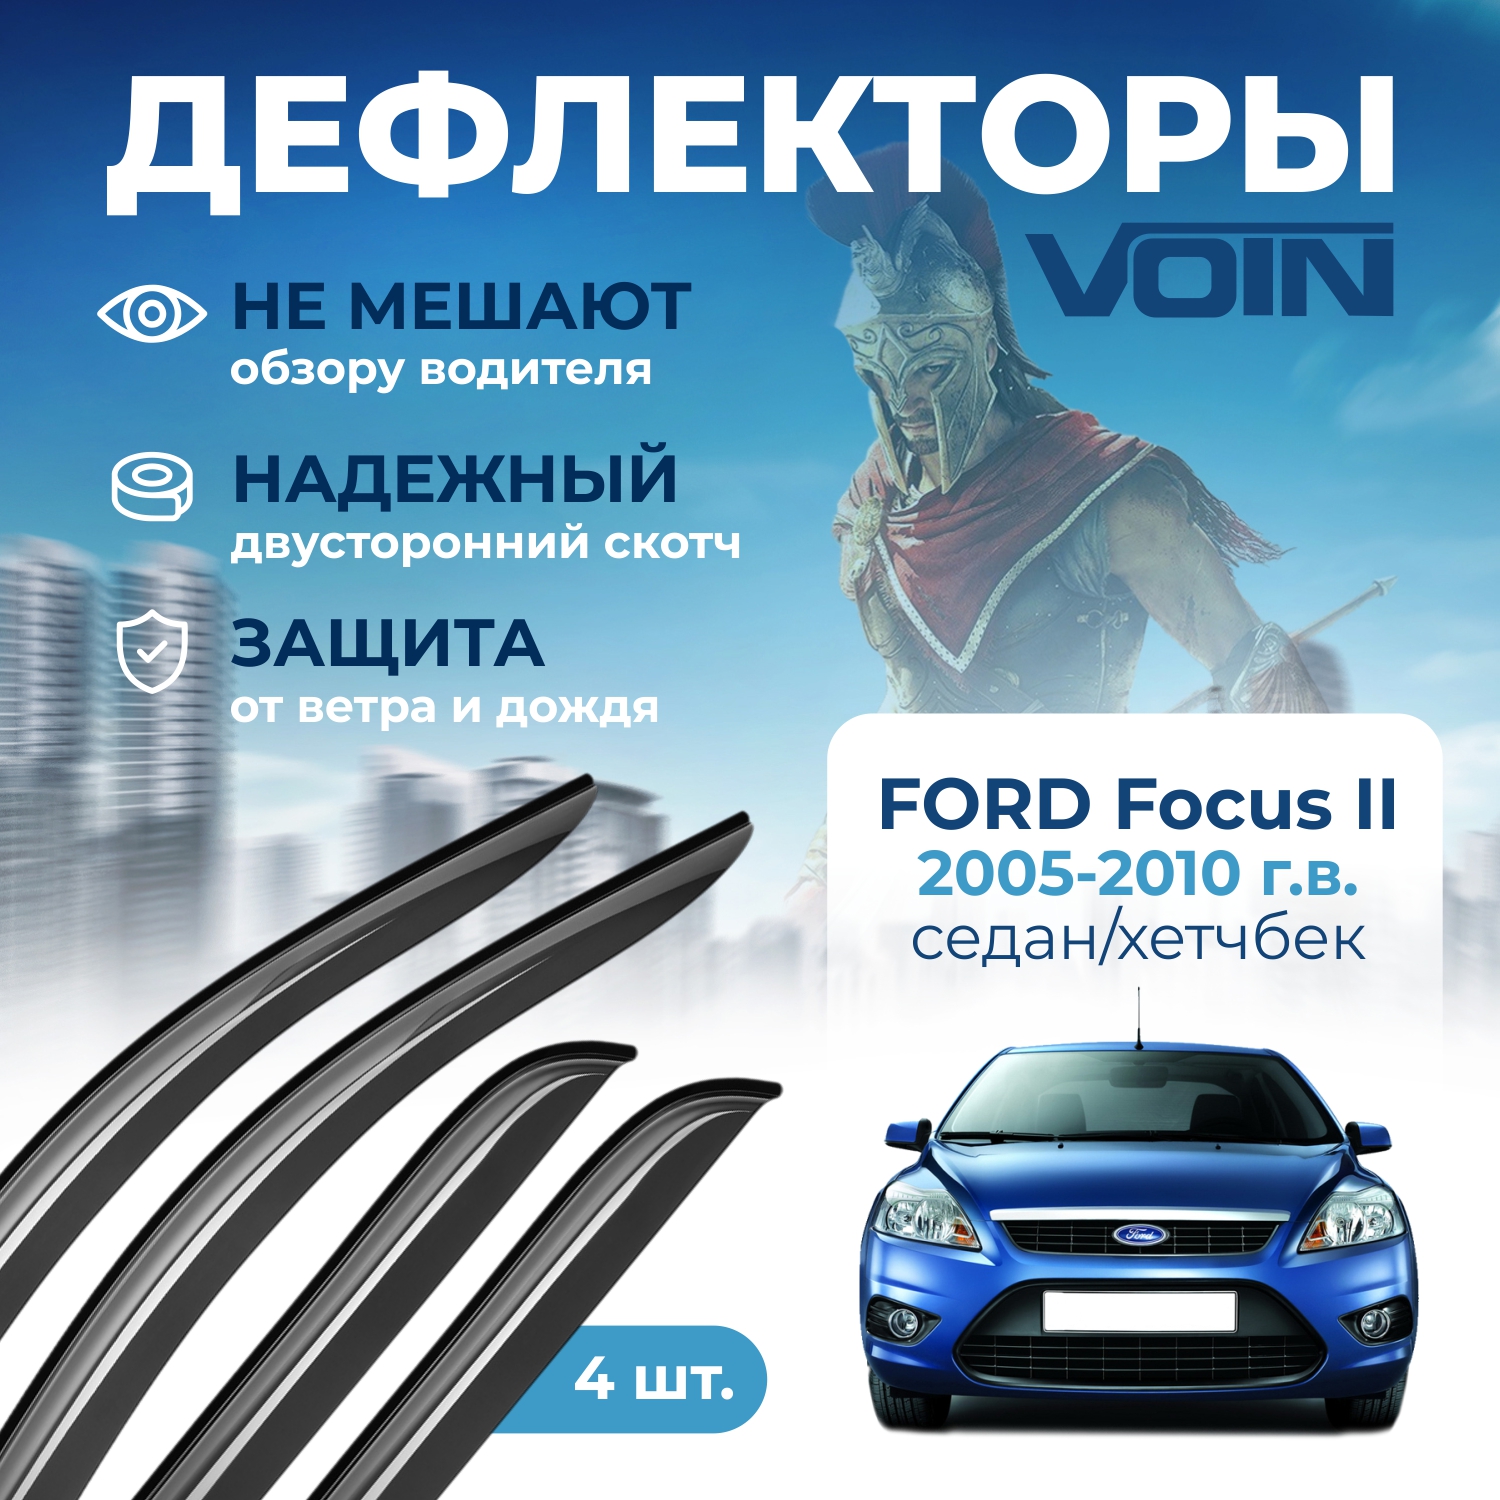 Дефлекторы окон Voin на автомобиль Ford Focus II 2005-2010 седан, хетч. накладные 4 шт.